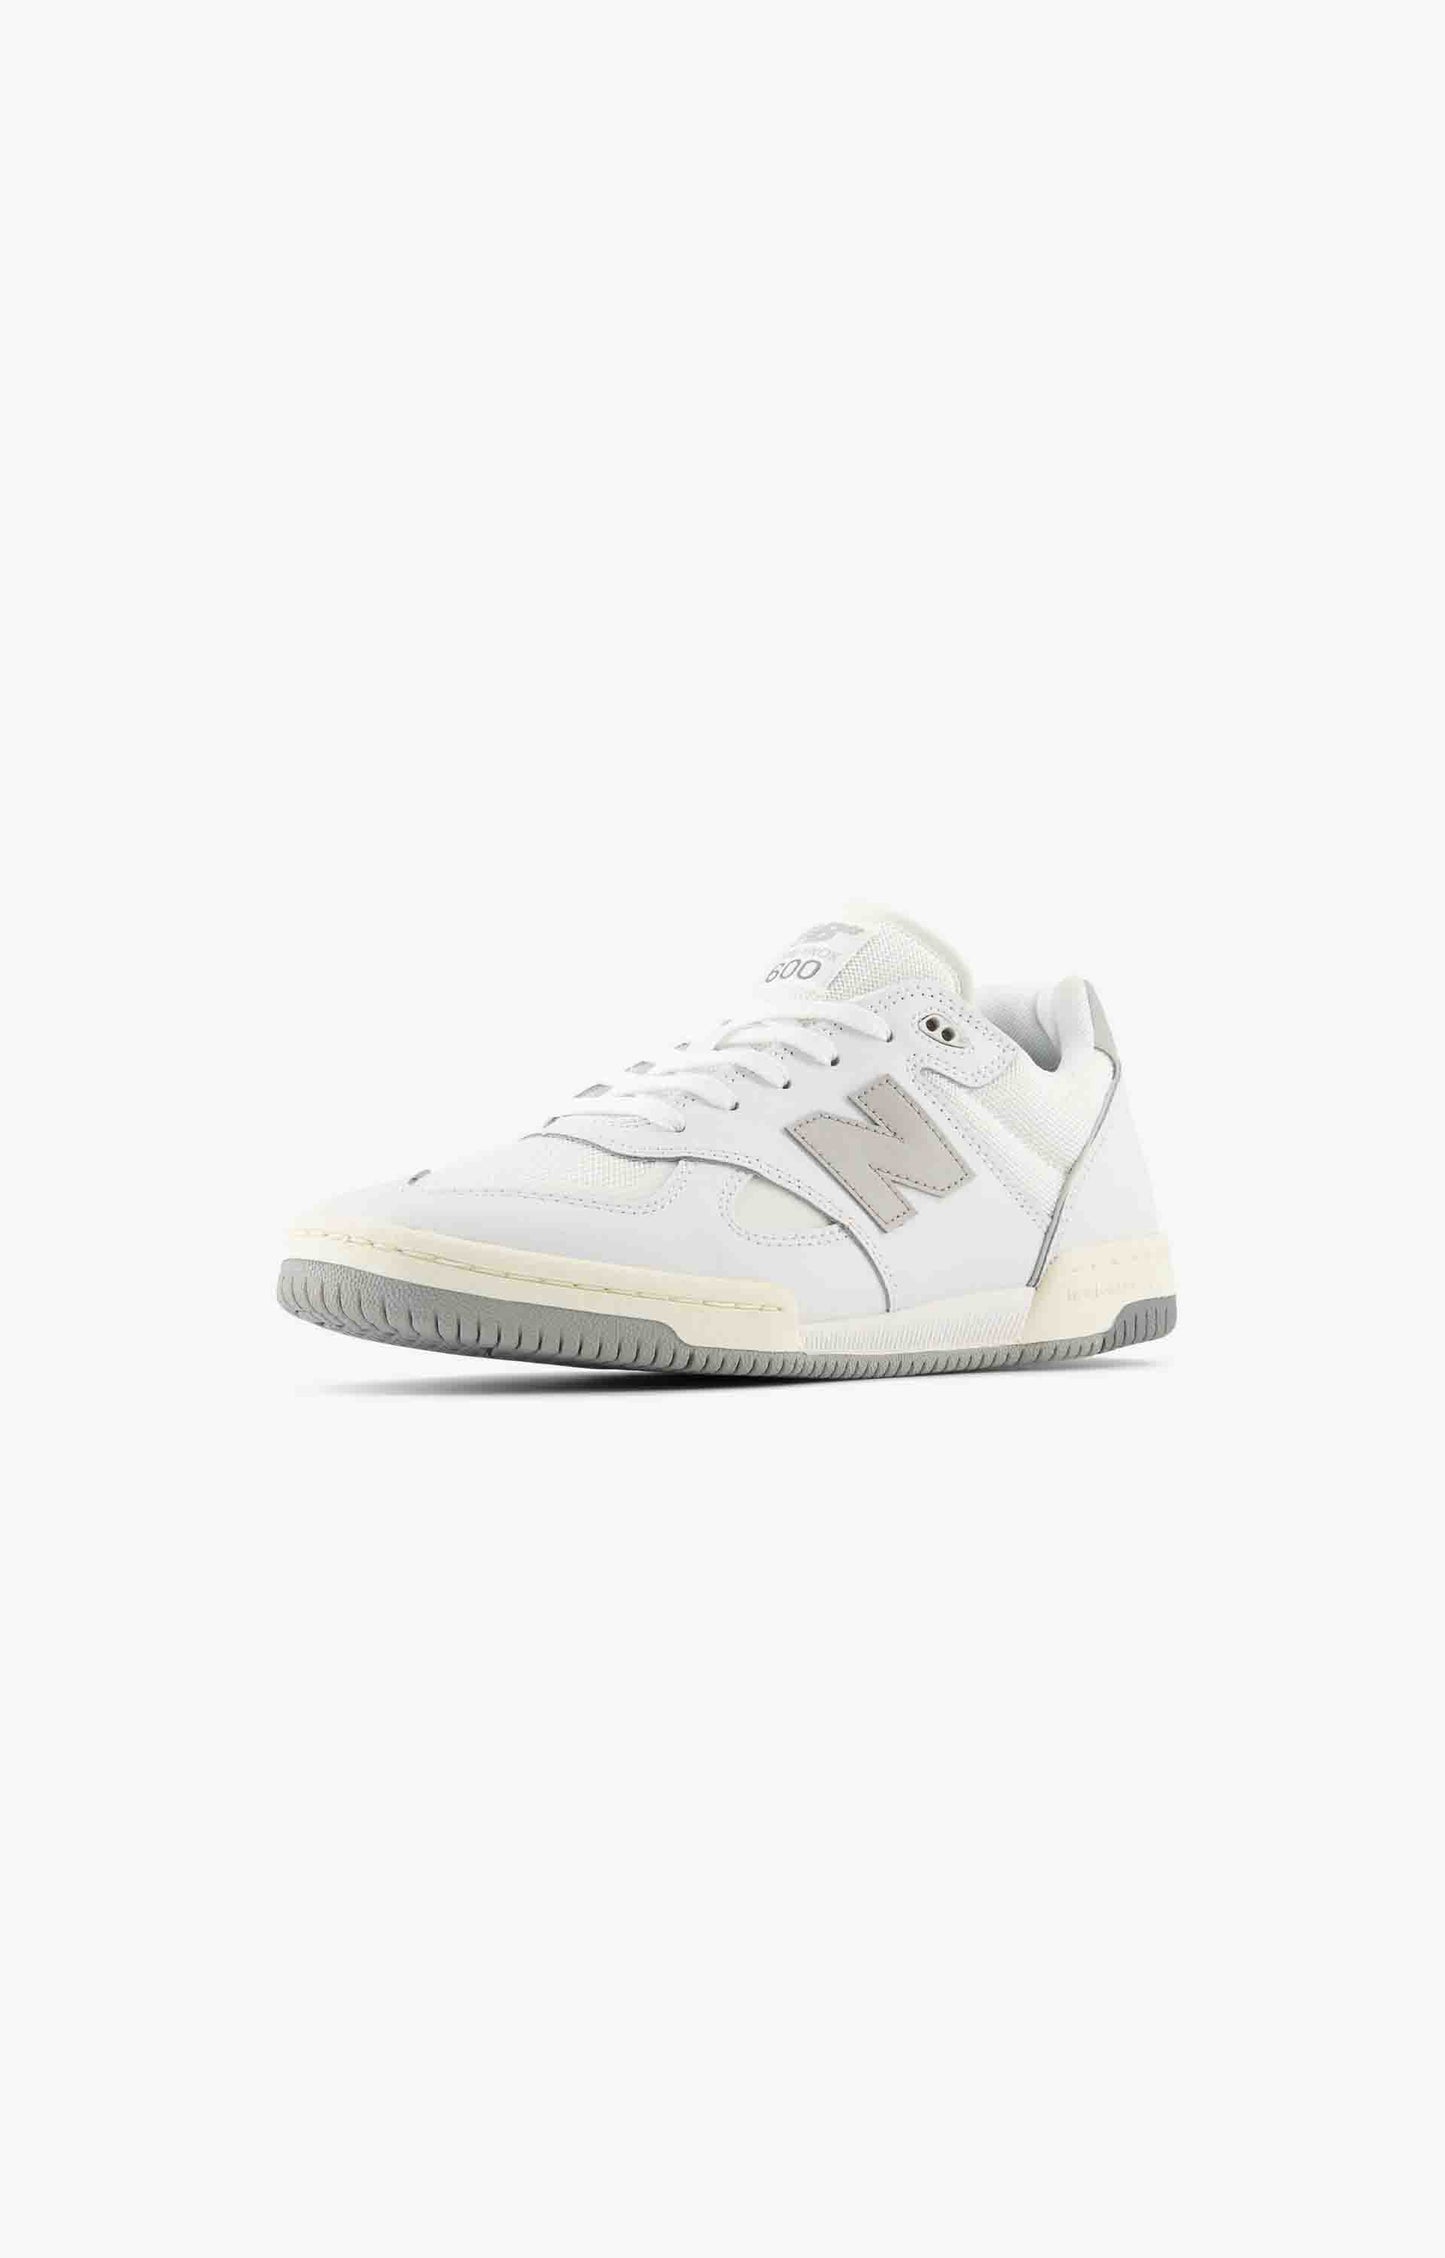 New Balance Numeric Tom Knox NM600CWG Shoe, White/Grey